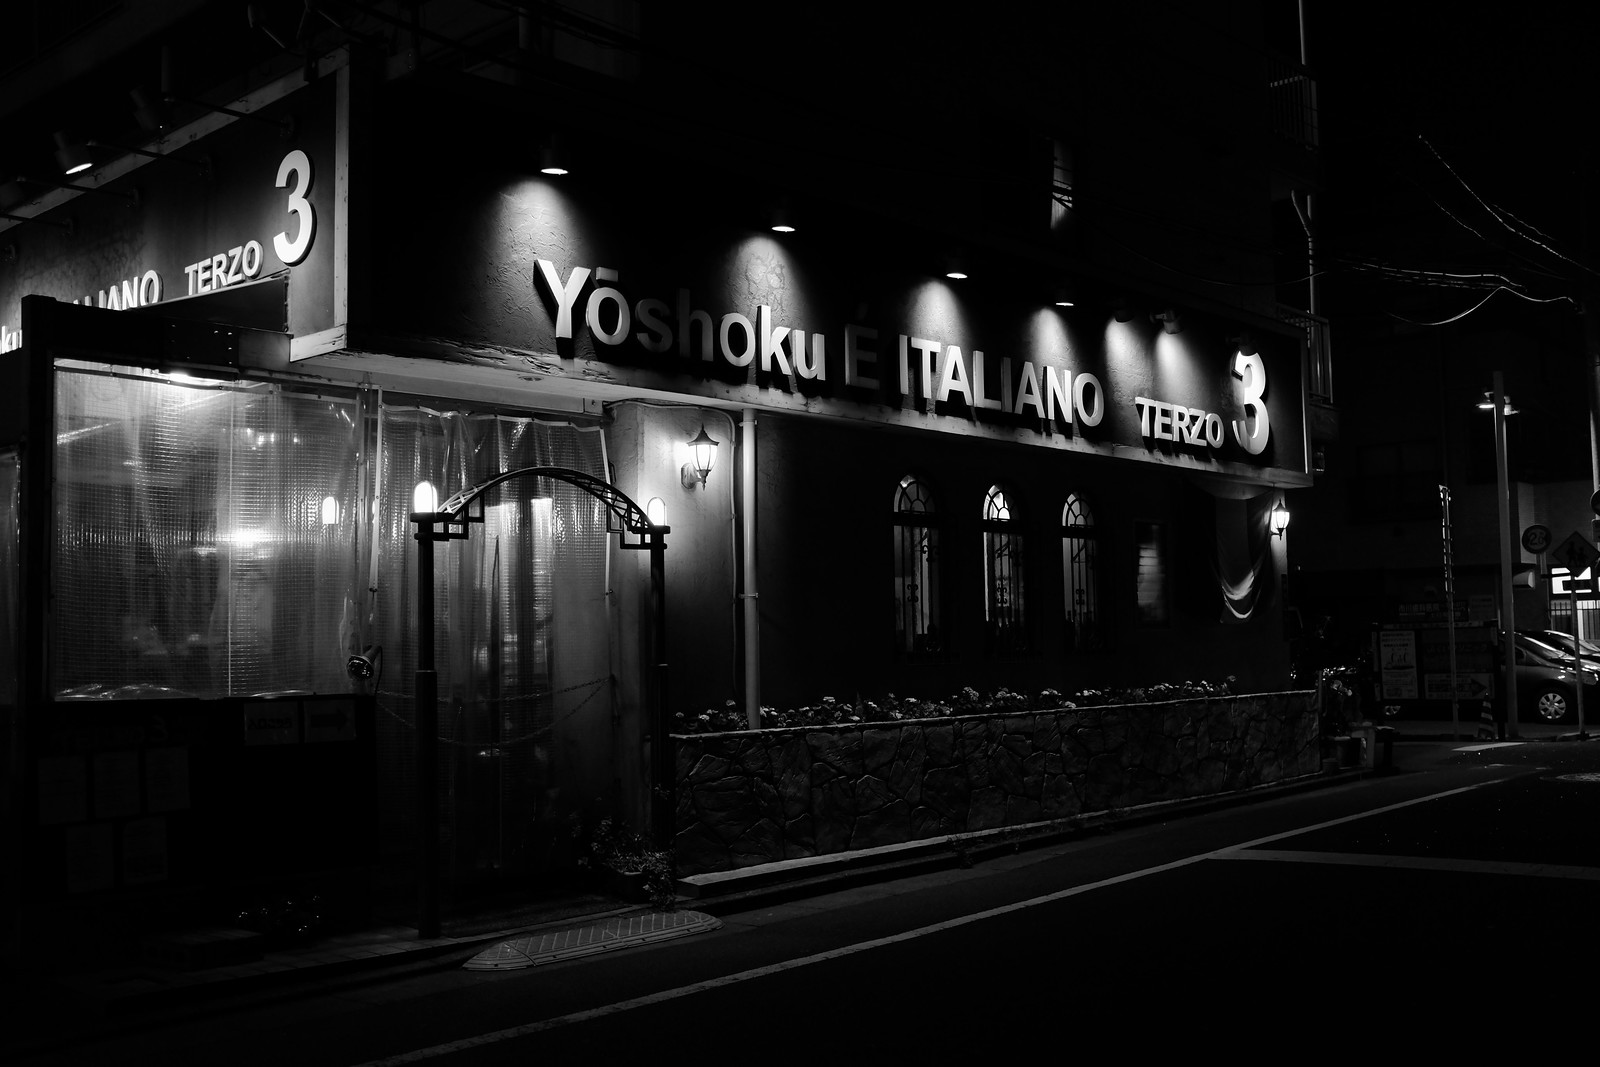 Sumidaku Kinshicho night photo in Tokyo, Japan.